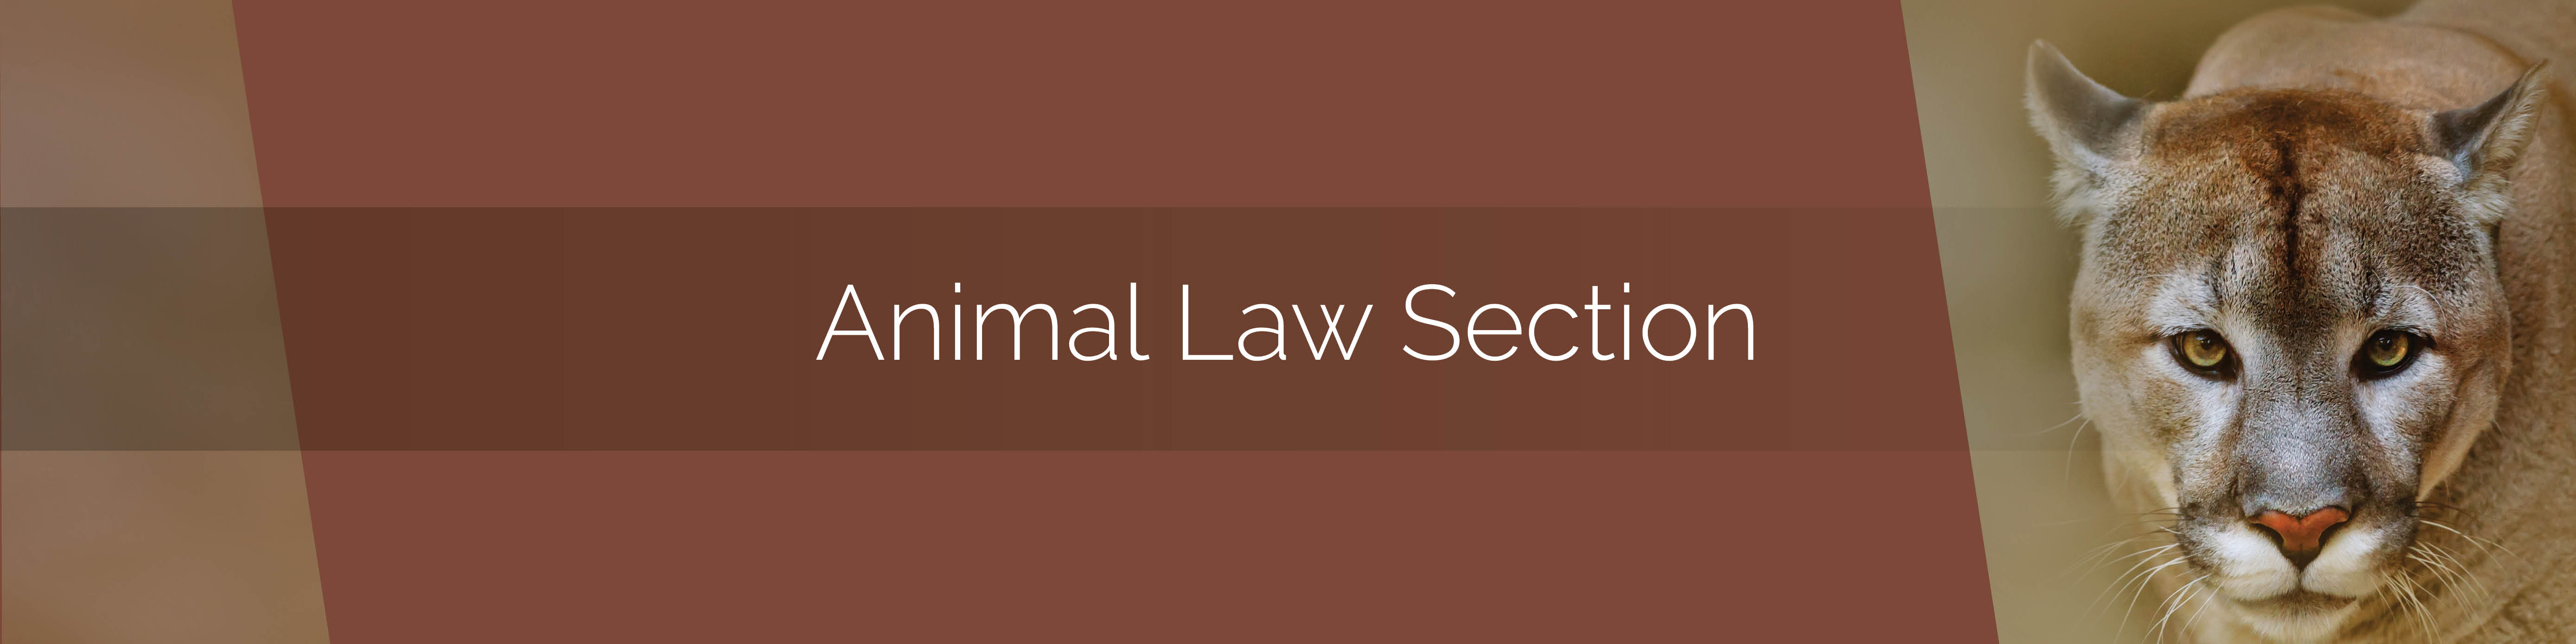 animal law dissertation ideas